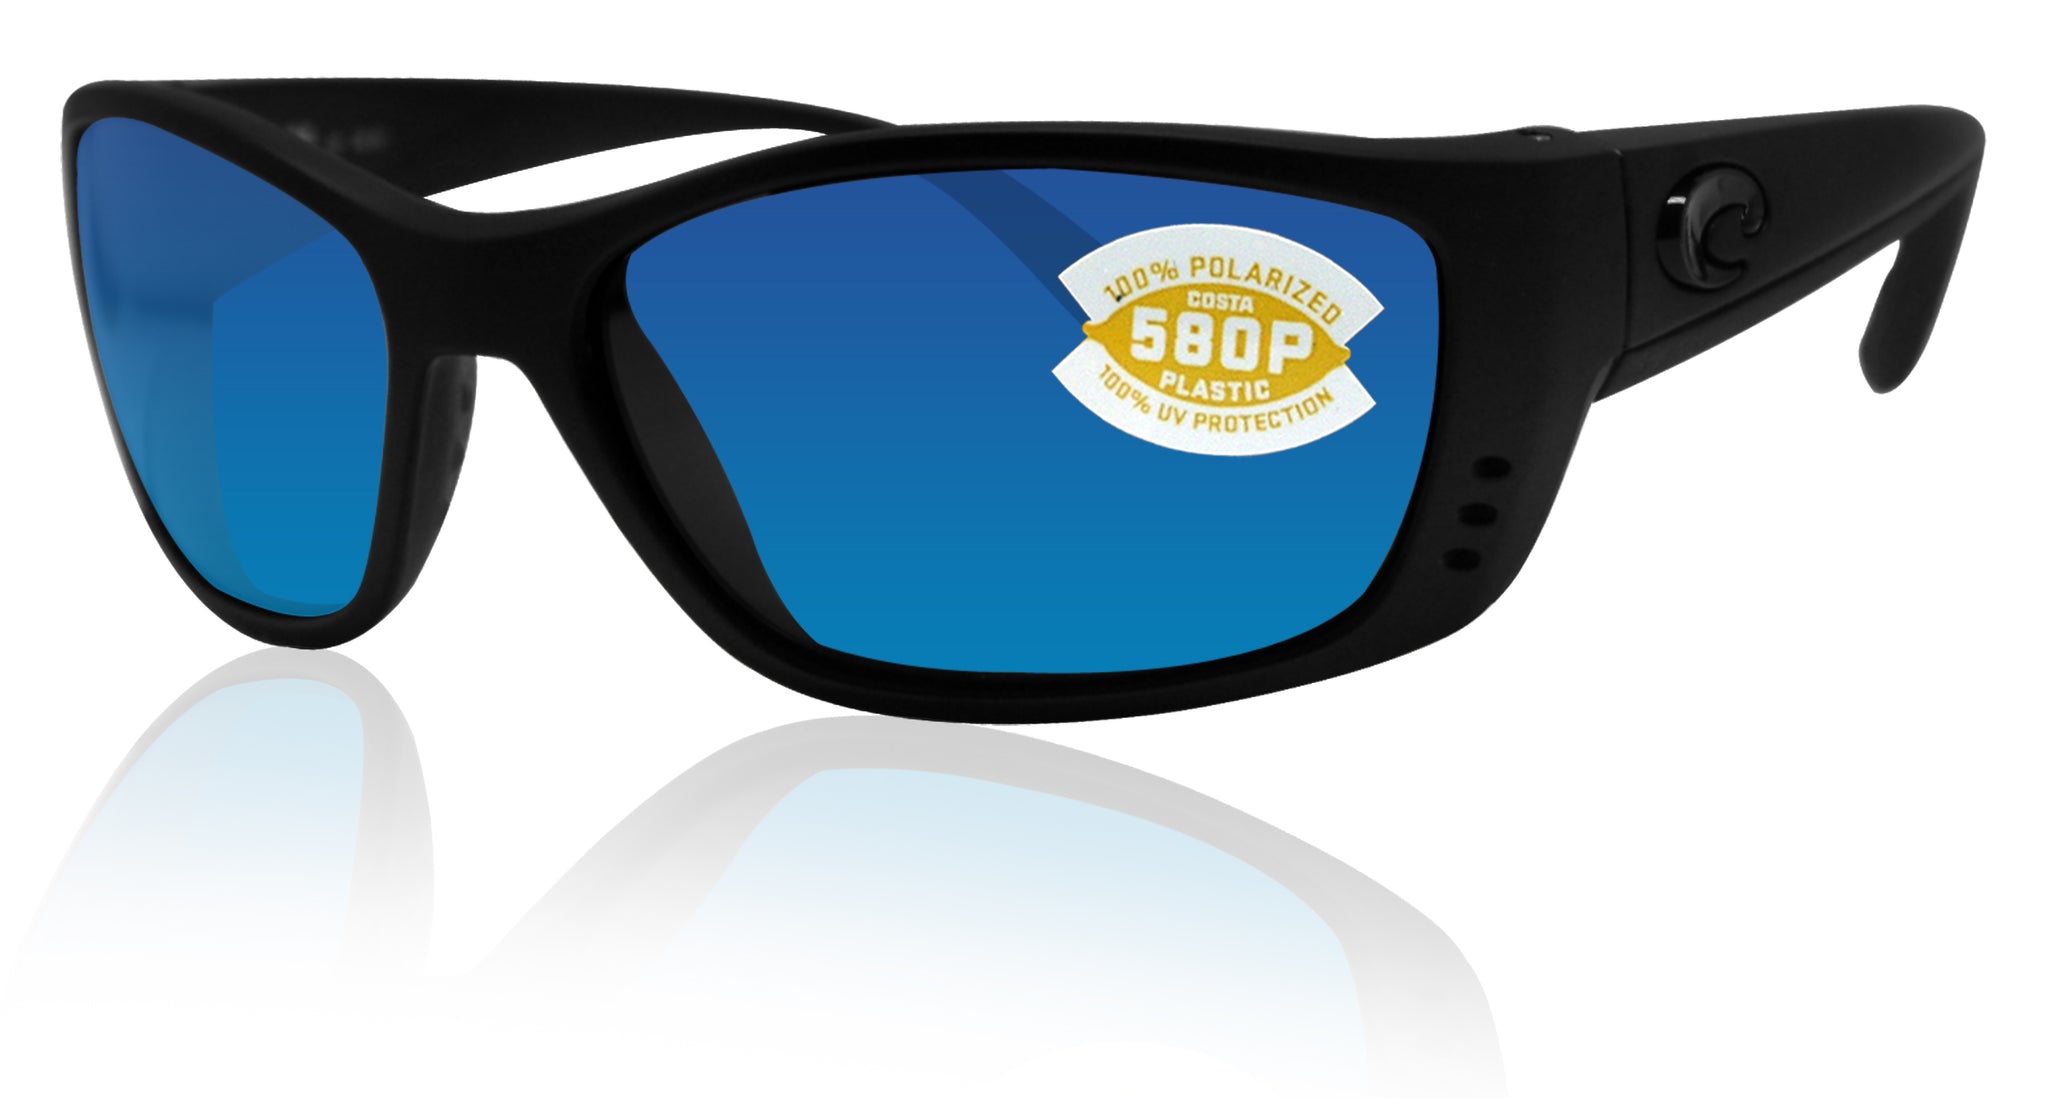 Costa Del Mar FISCH 64 mm Blackout Sunglasses